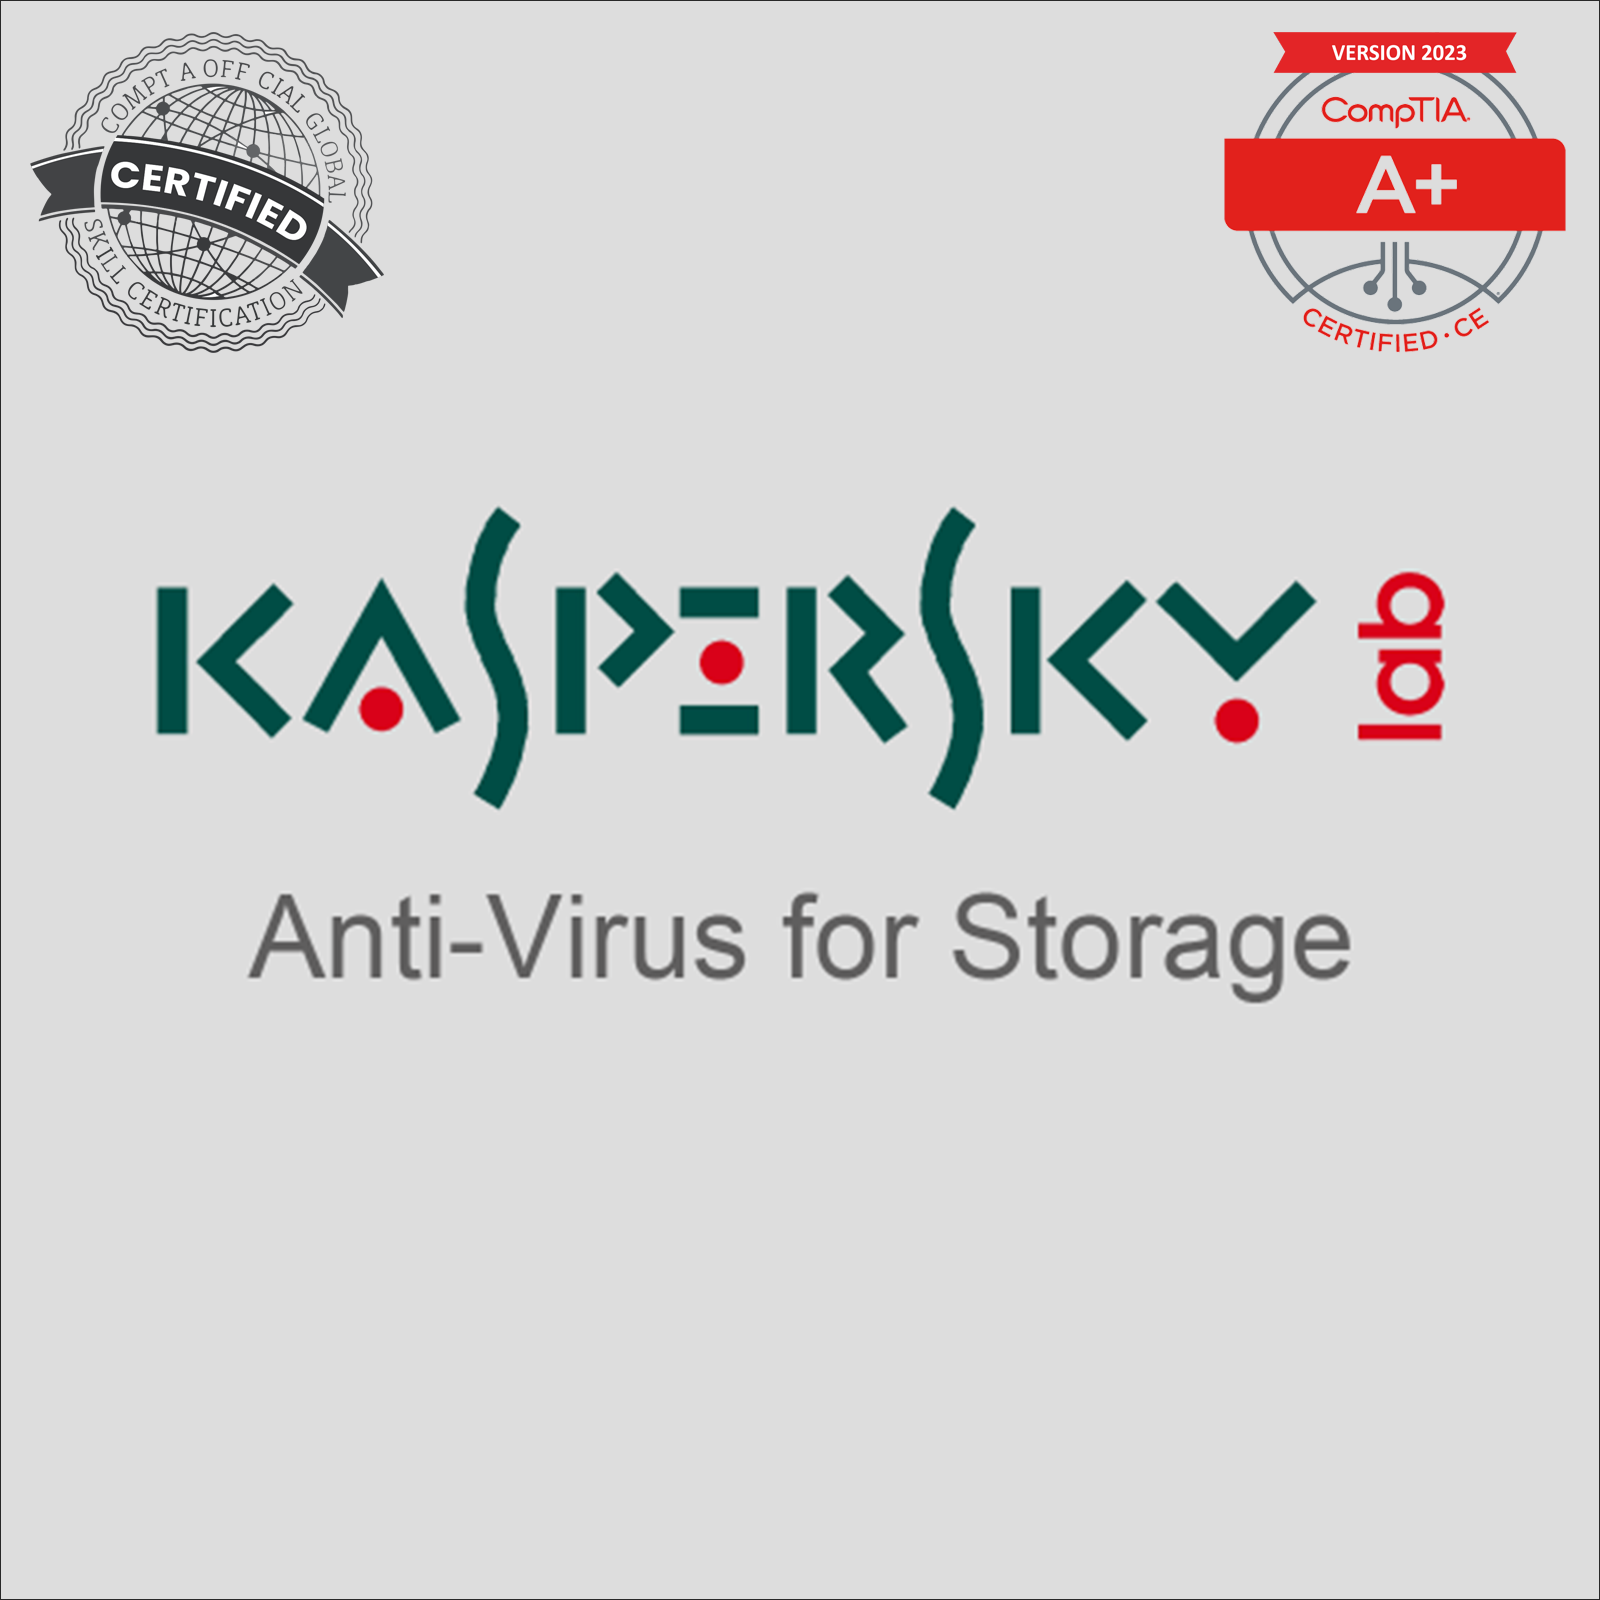 Kaspersky Anti-Virus for Storage - EDU - Renewal - 3-Year / 1500-2499 Seats (Band W)